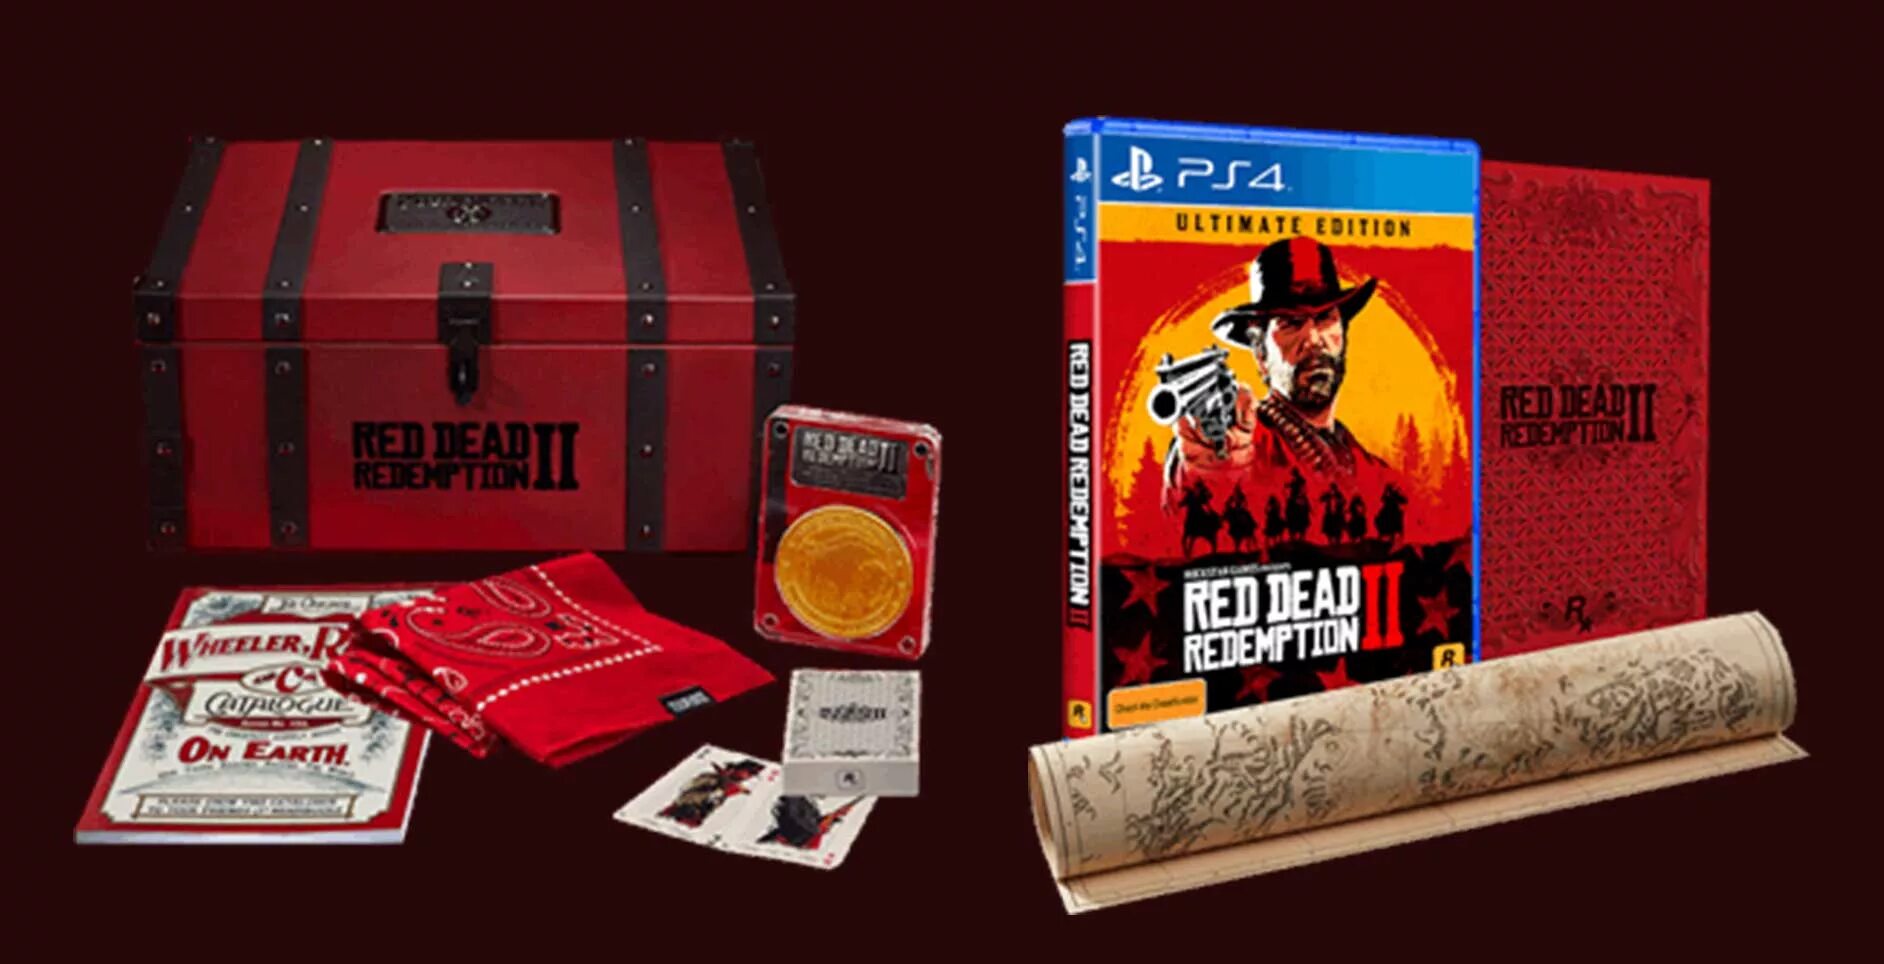 Red dead ps4 купить. Red Dead Redemption 2: Ultimate Edition. Red Dead Redemption 2 коробка. Коллекционка Red Dead Redemption 2. Rdr 2 Collectors Box.